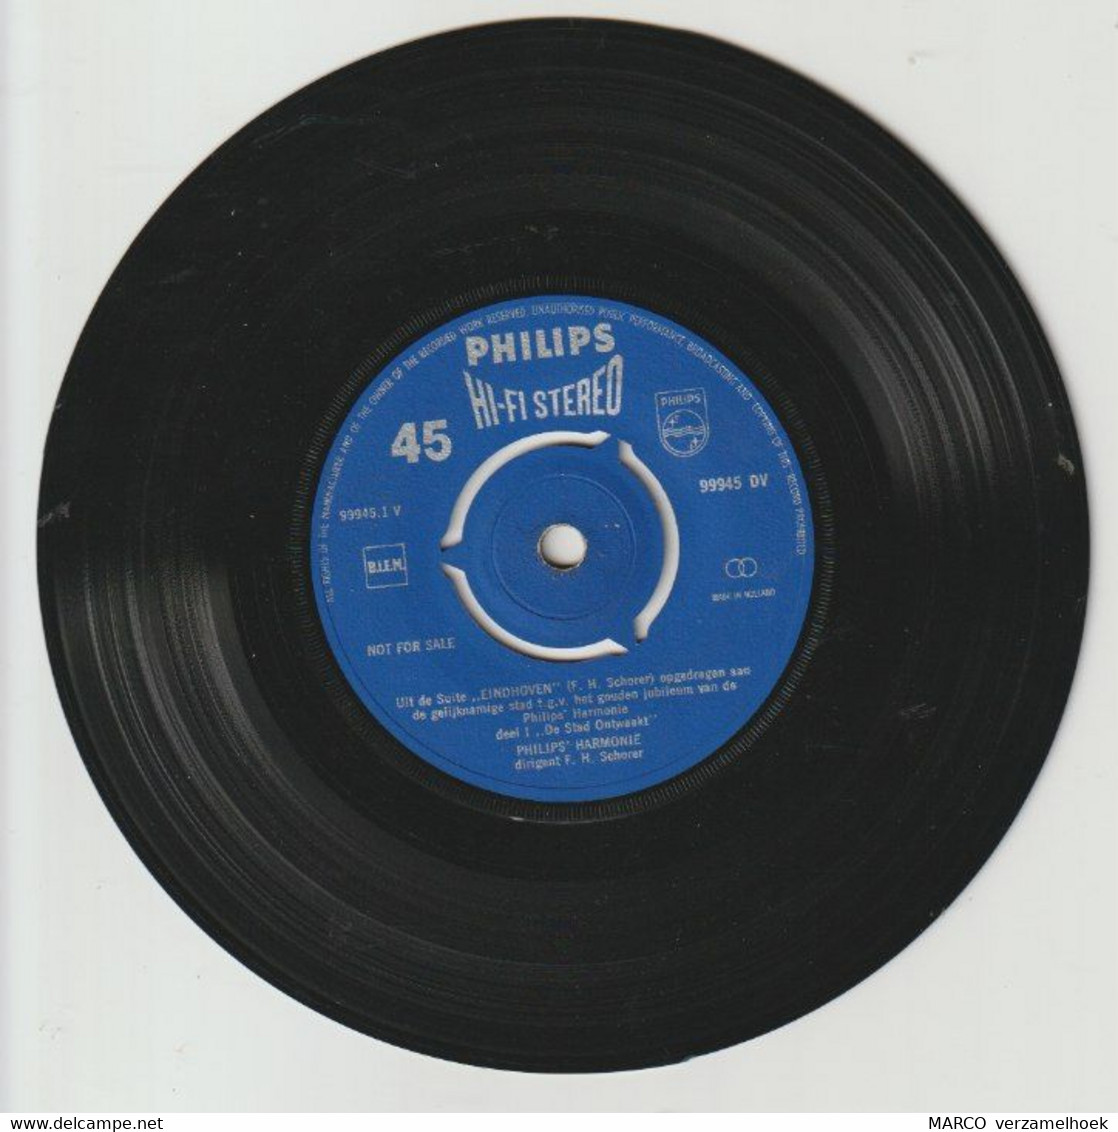 45T Single Afscheidsrede Van Ir. P.F.S. Otten President Van PHILIPS Gloeilampenfabrieken Eindhoven (NL) 1961 - Other - Dutch Music